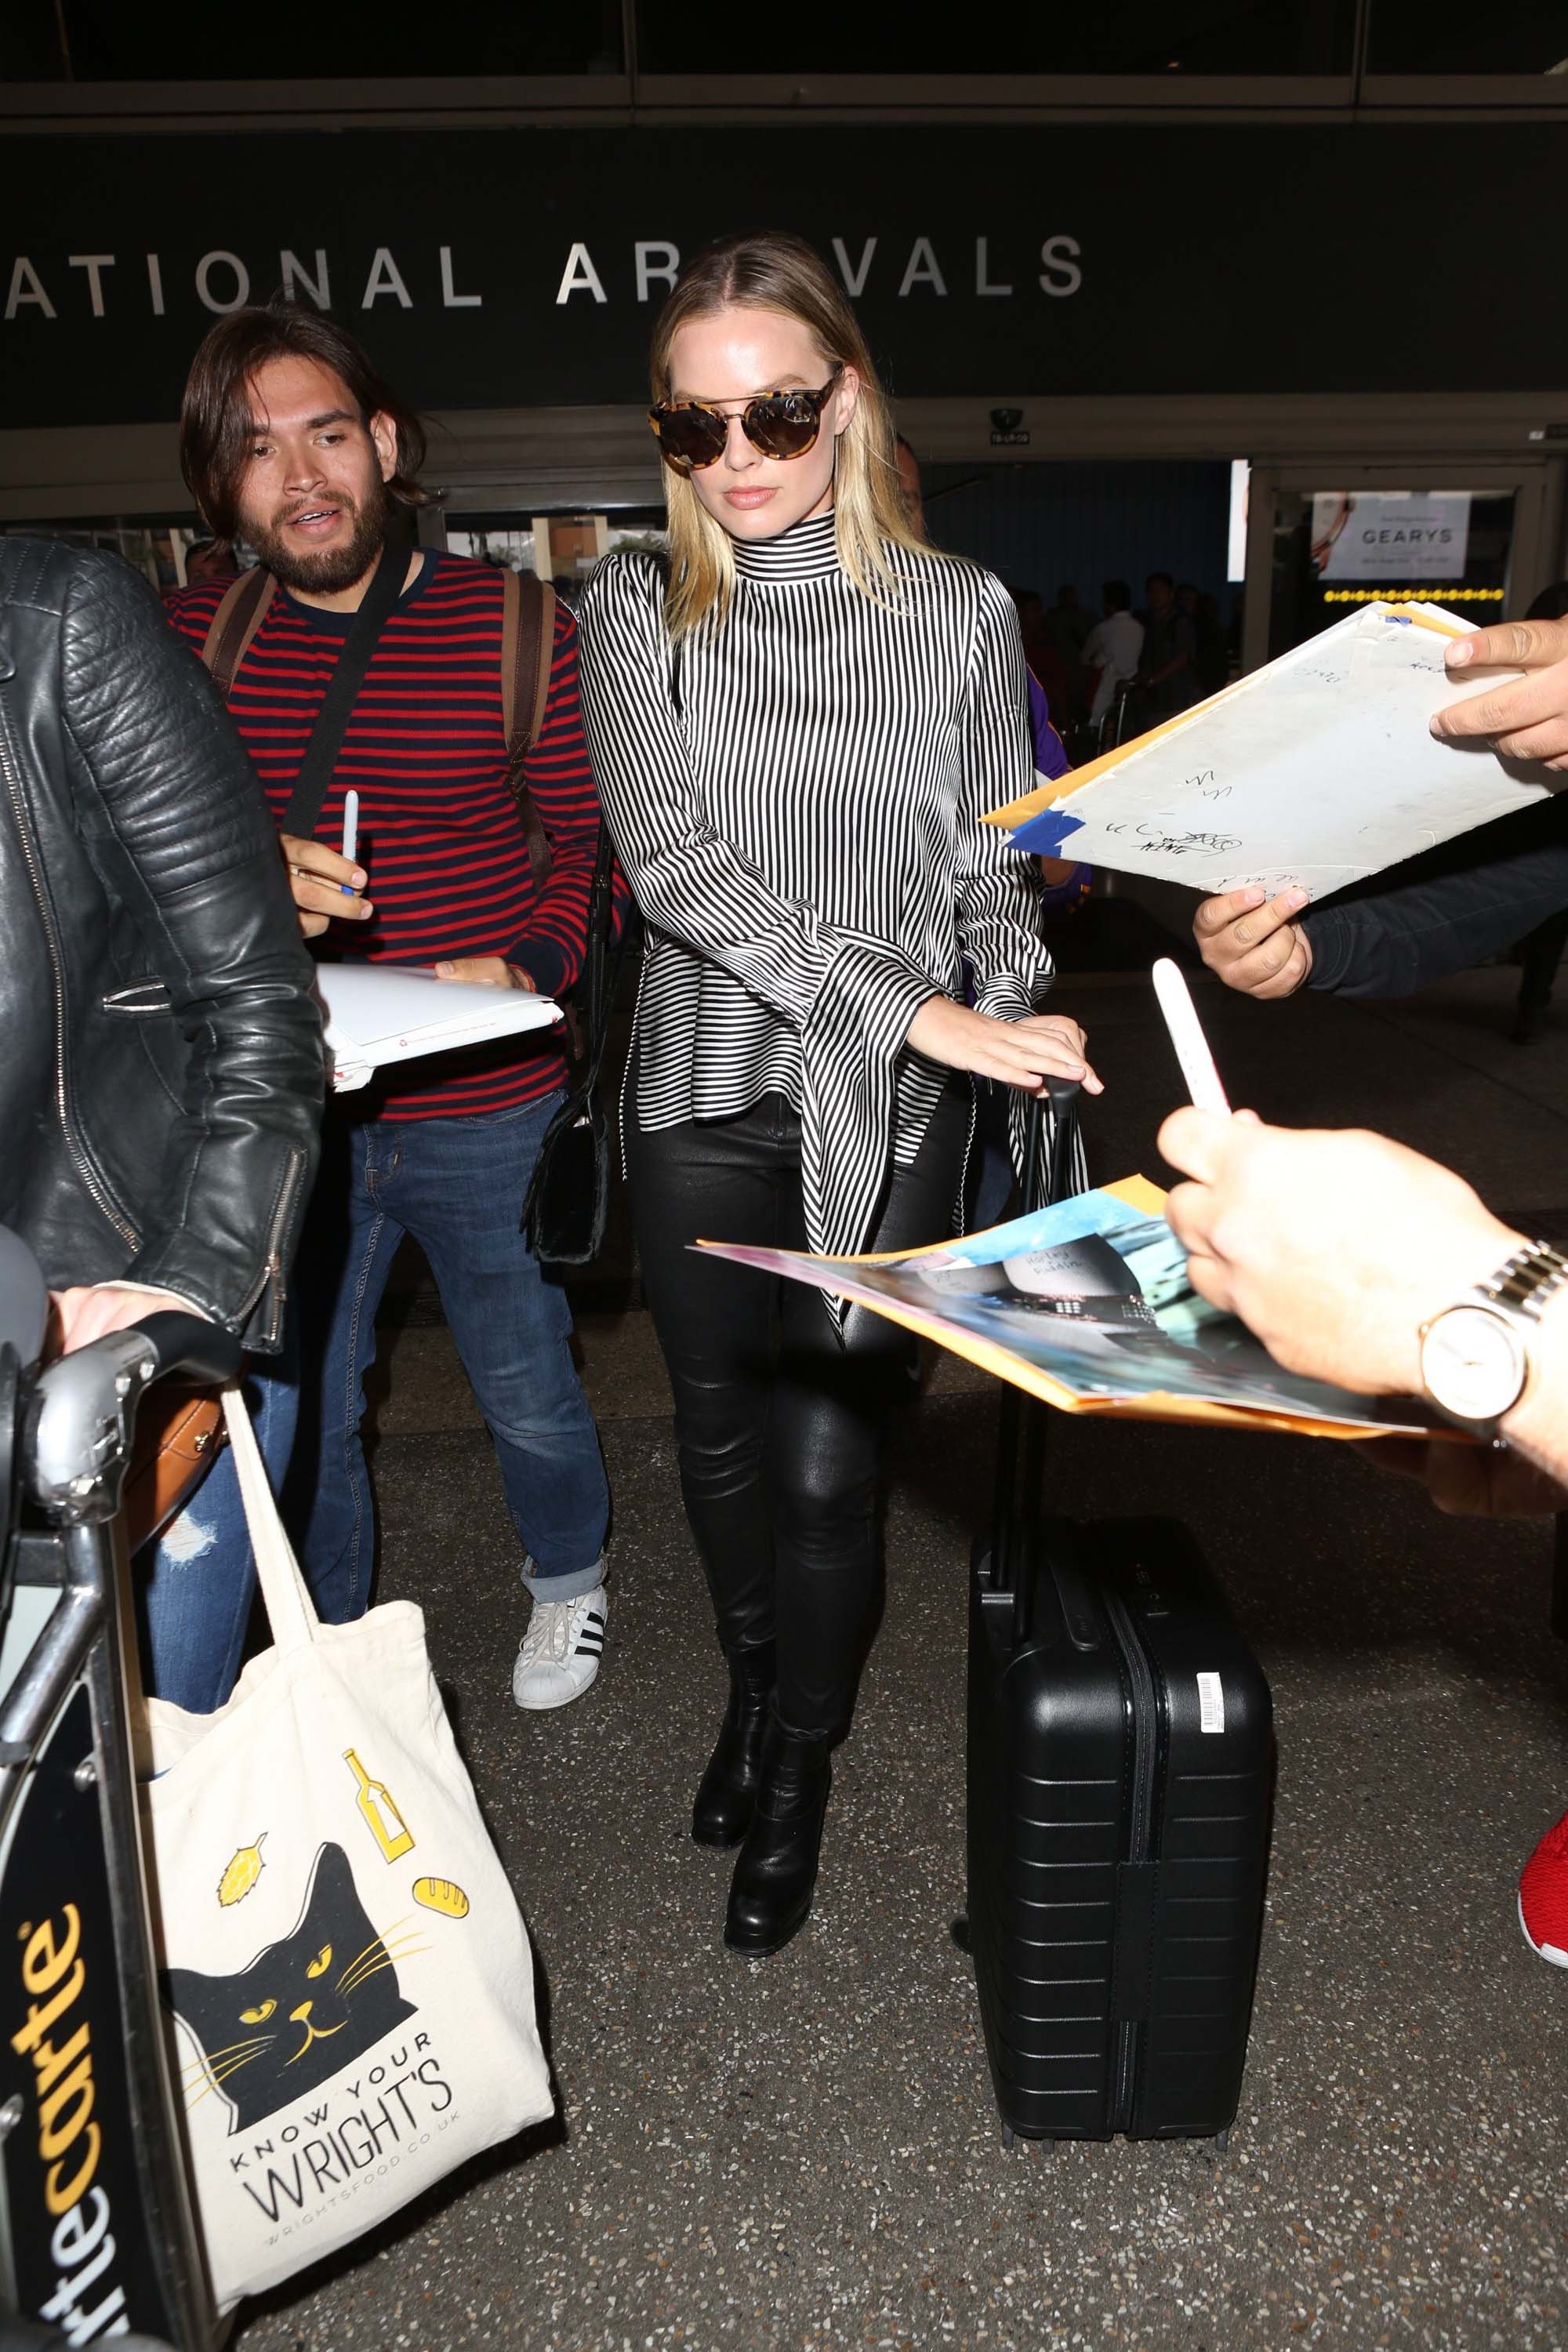 Margot Robbie seen at LAX airport